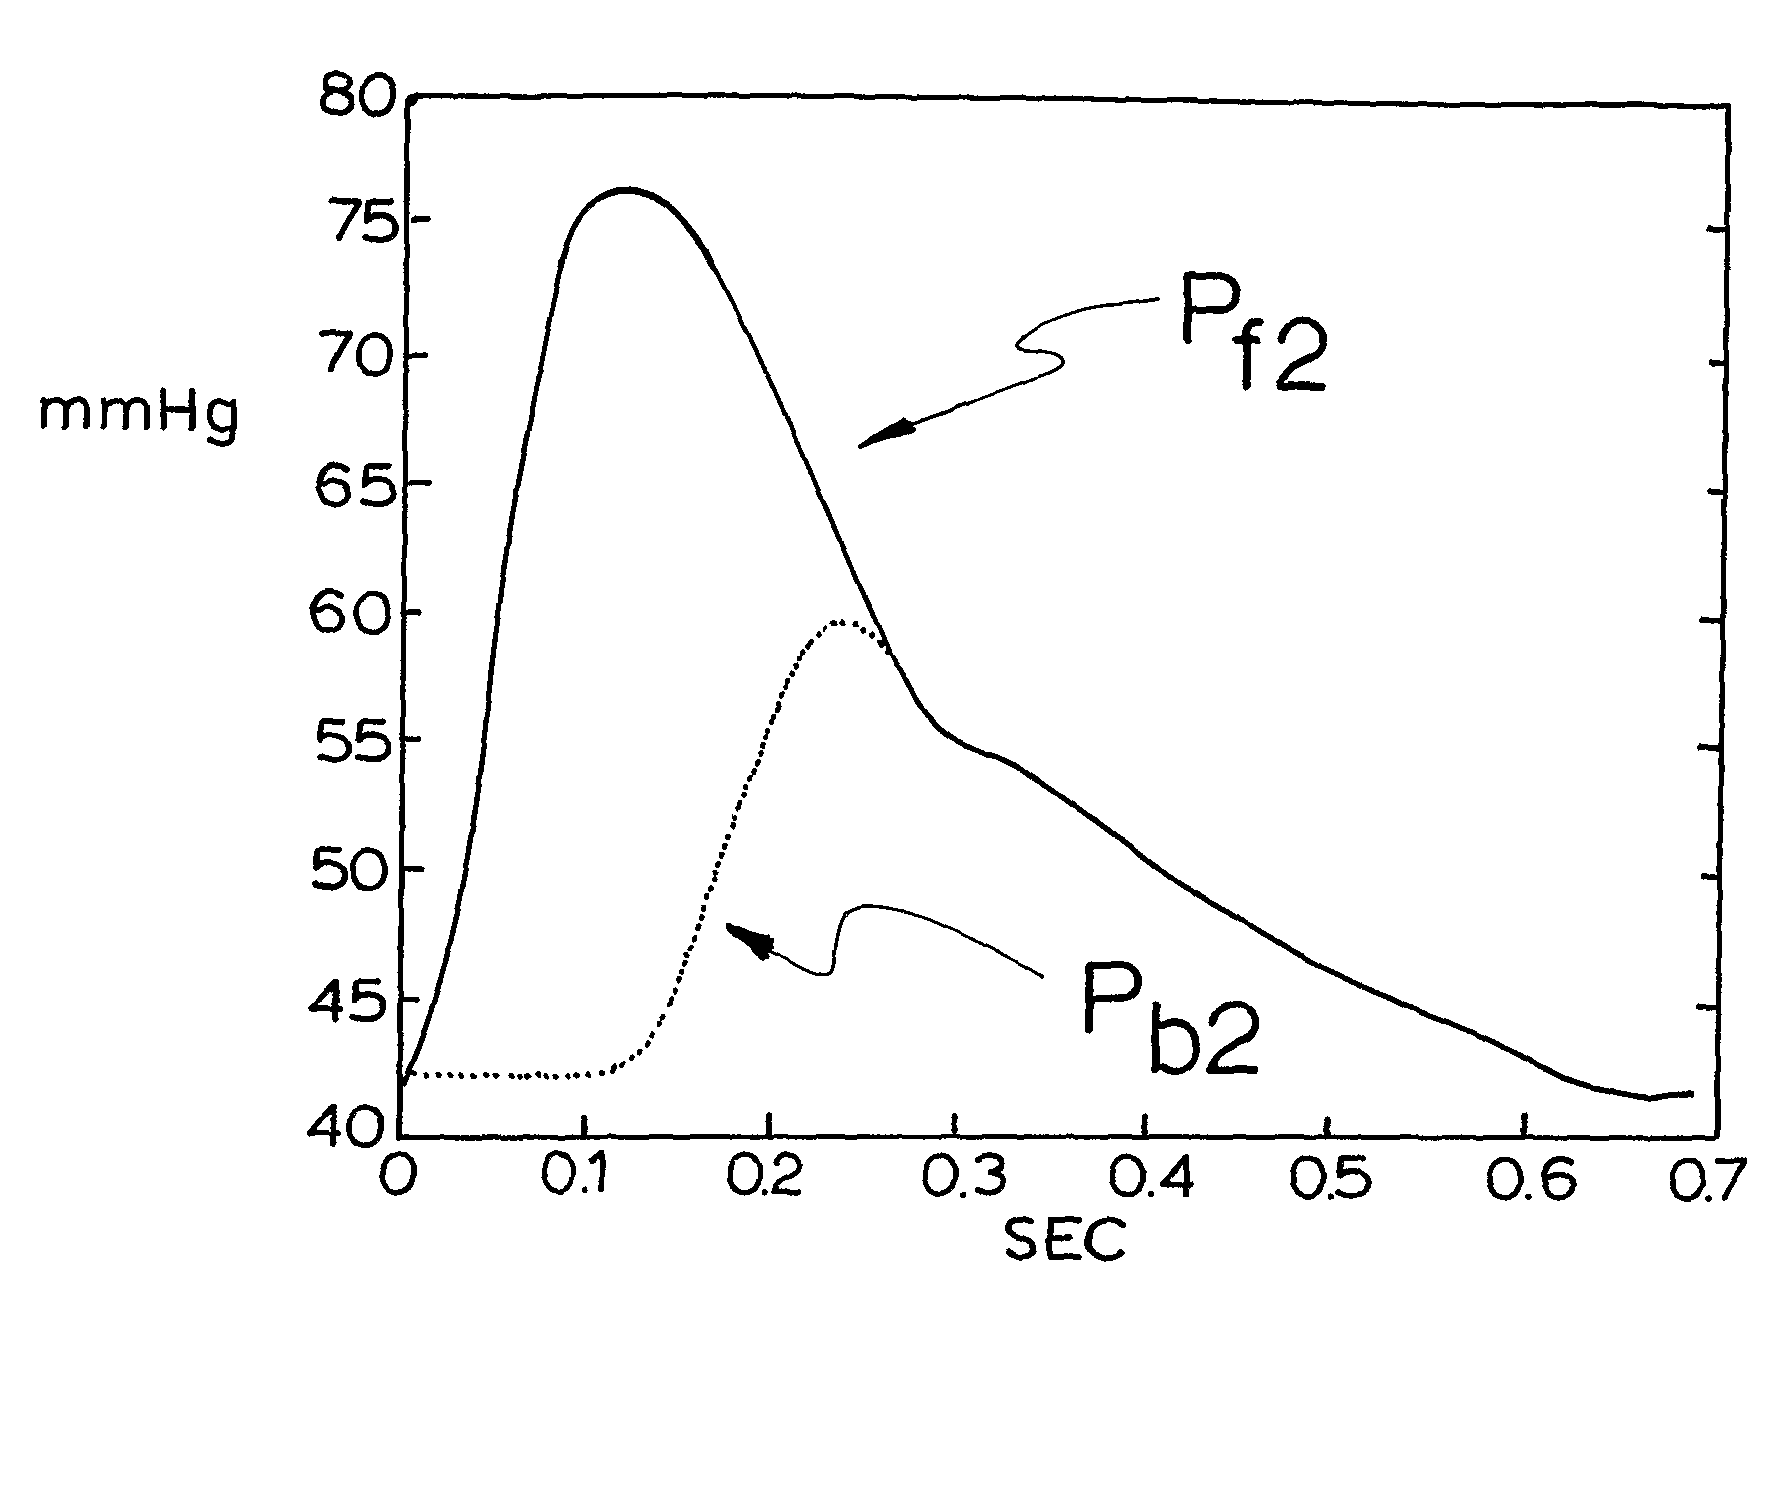 Method of estimating pulse wave velocity